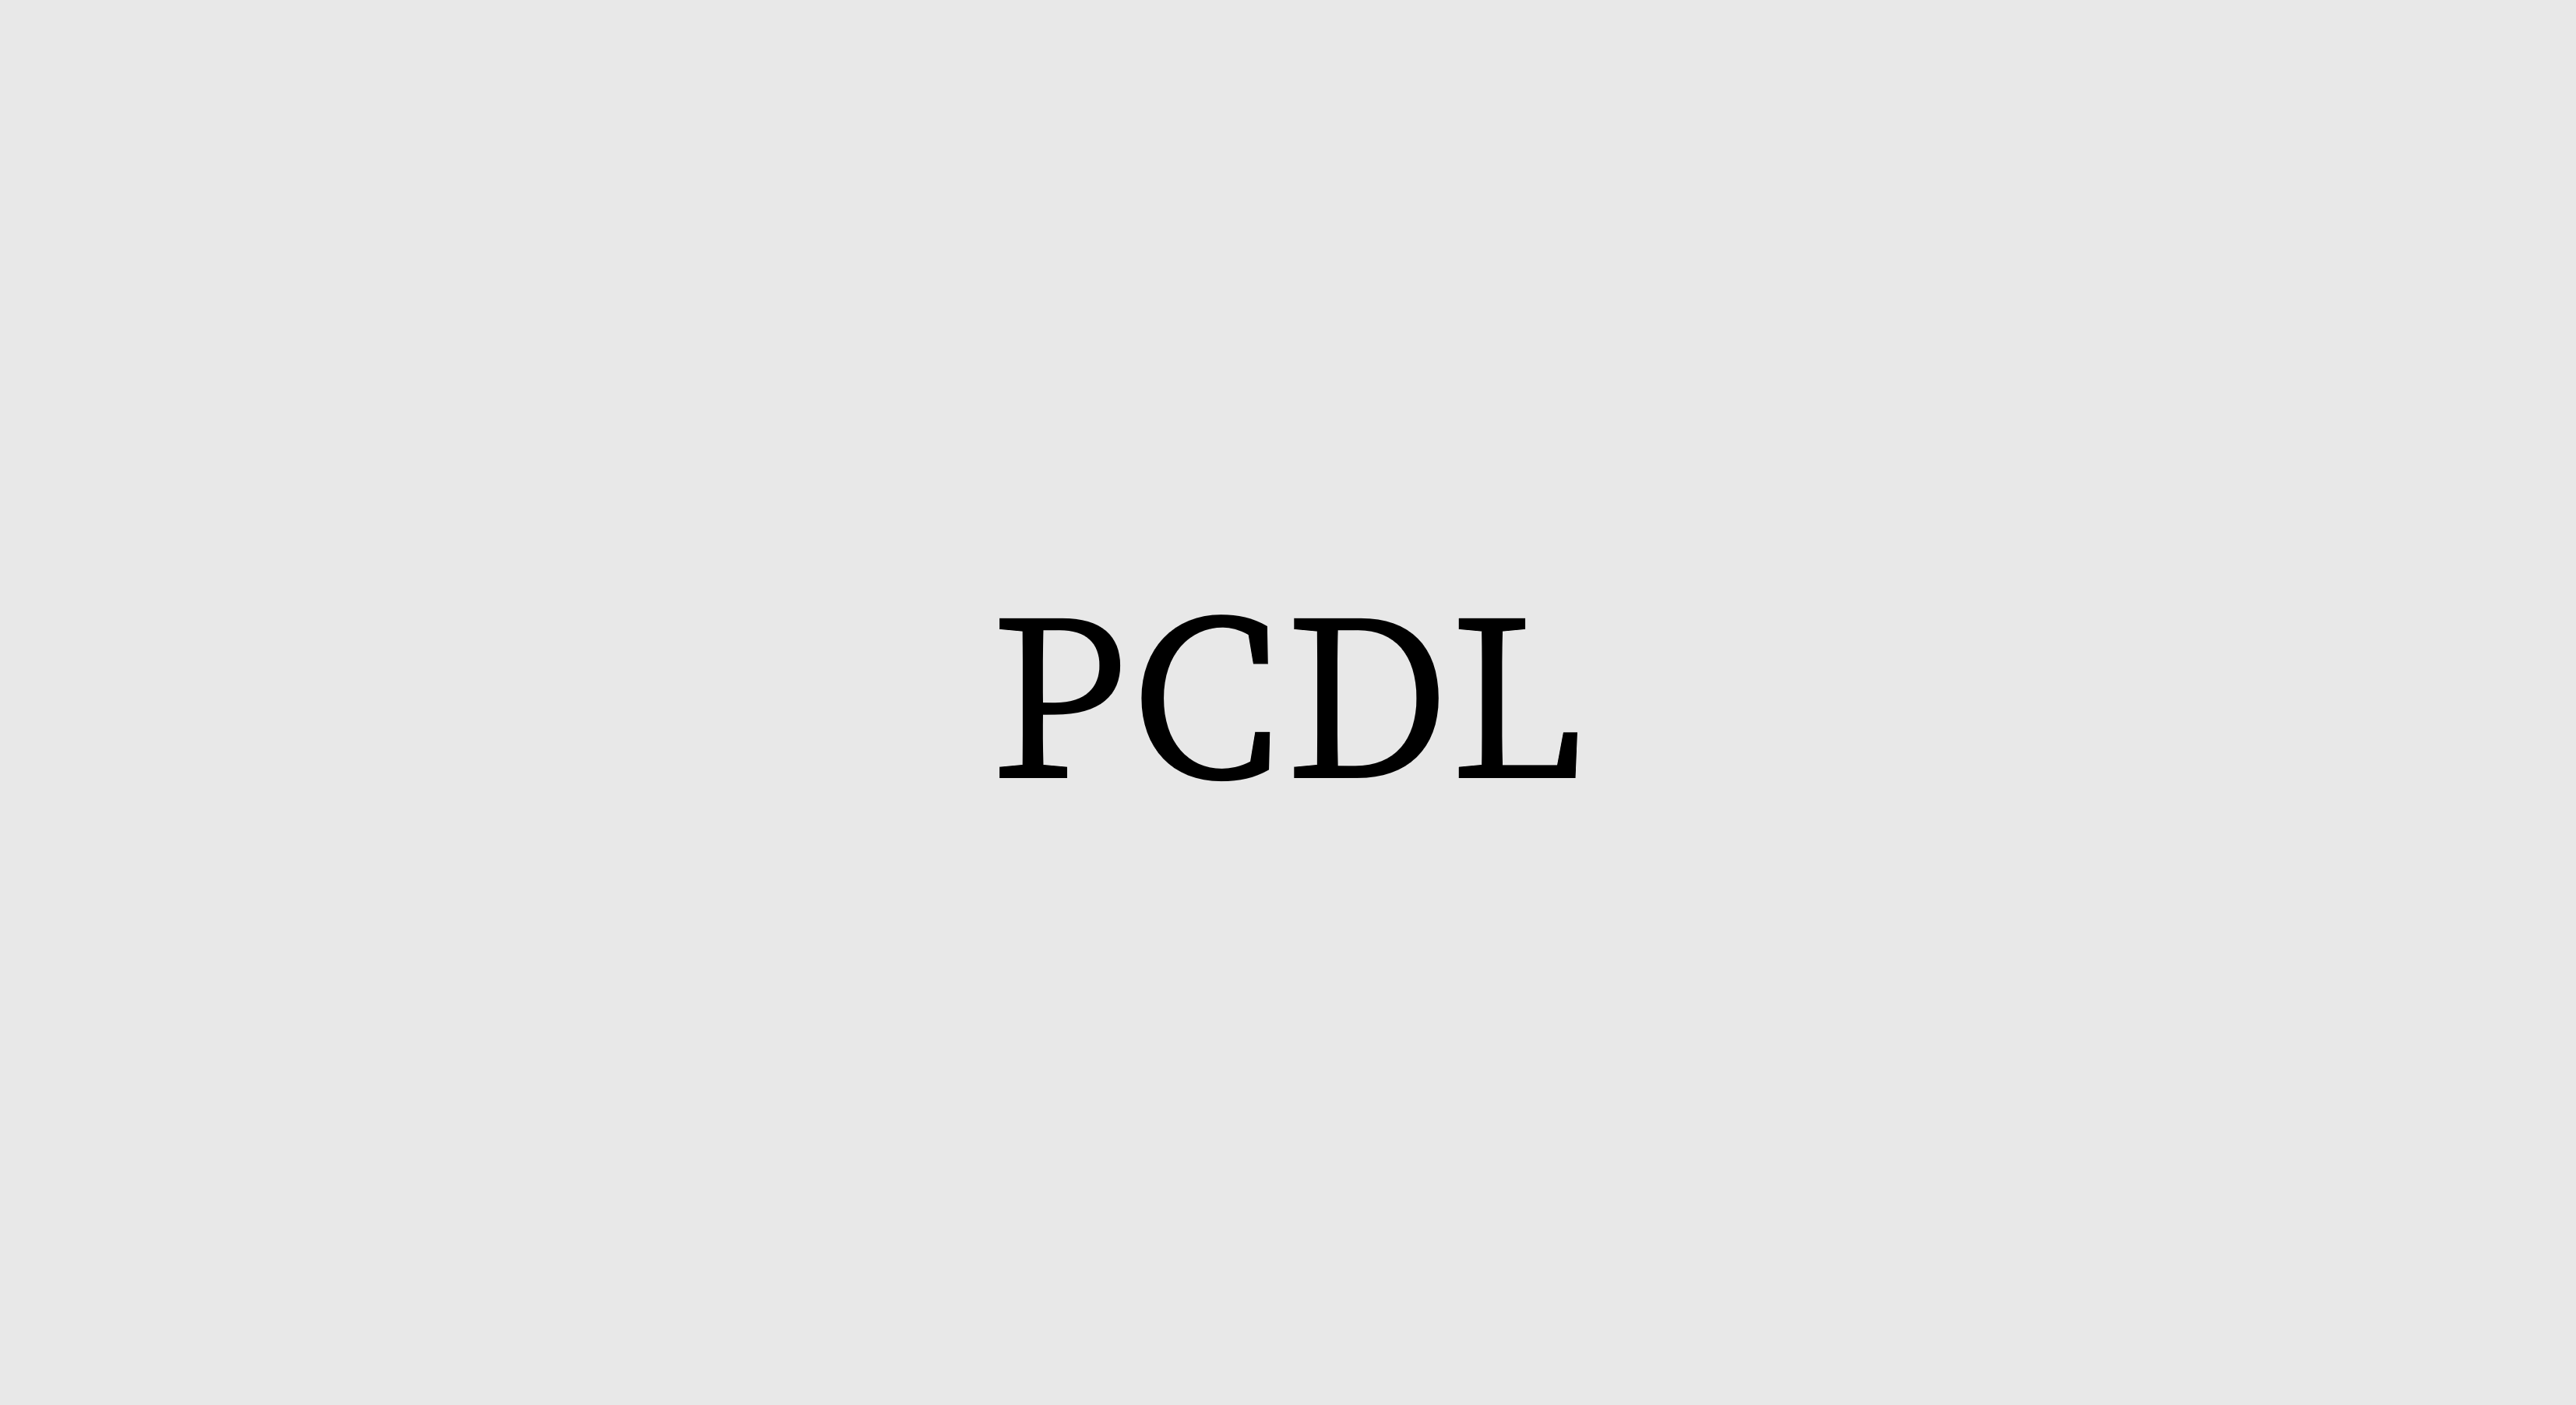 PCDL